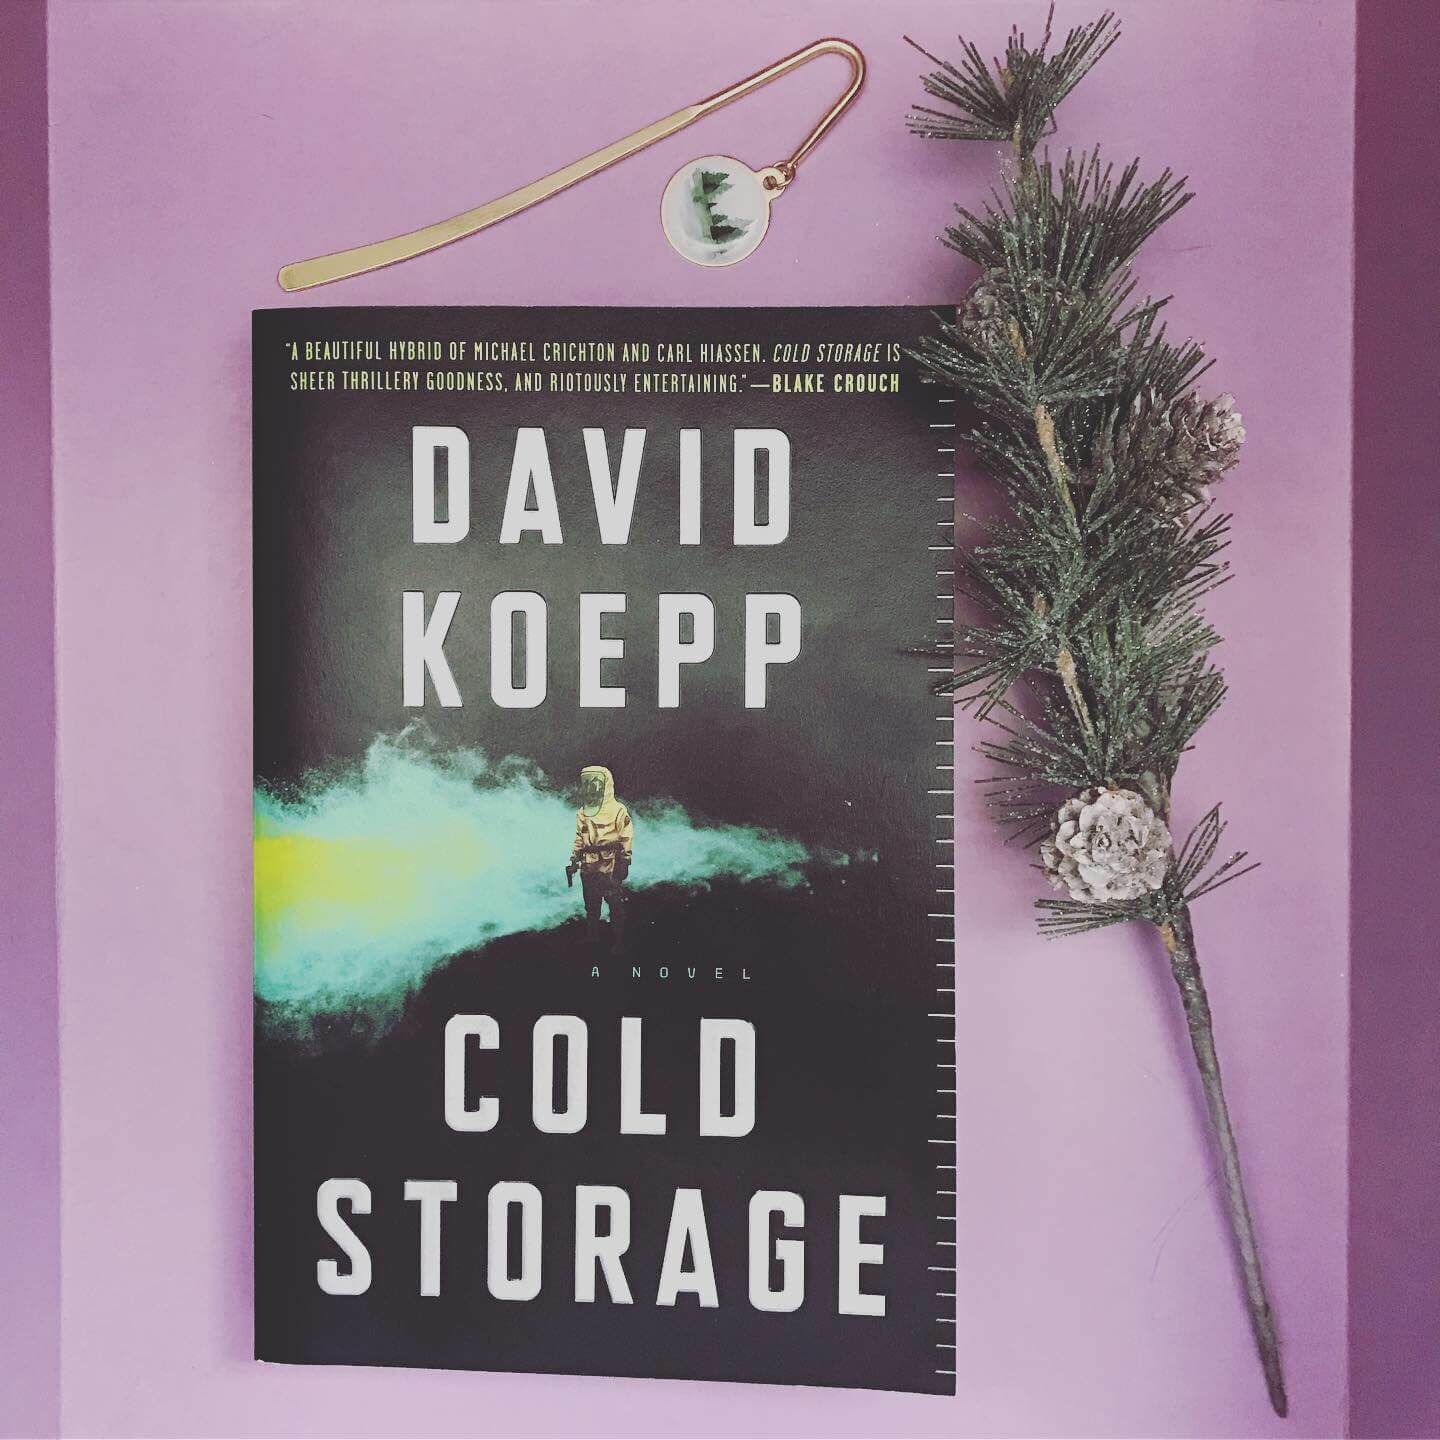 My favorite bookstagram of Cold Storage